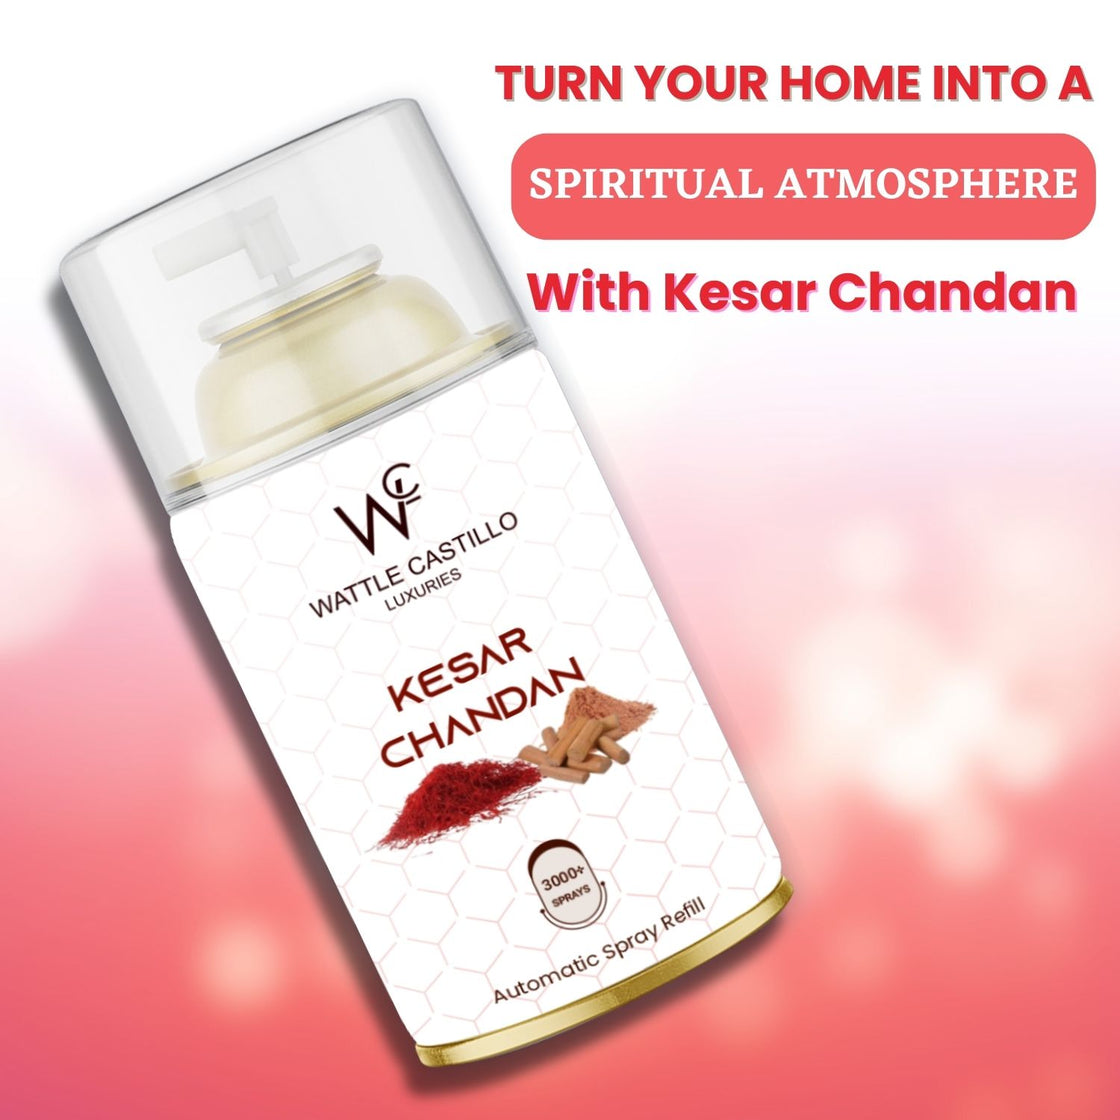 Kesar Chandan Automatic Room Fresheners Refill (265ml) & 3000+ Sprays Guaranteed Lasts up to 80 days